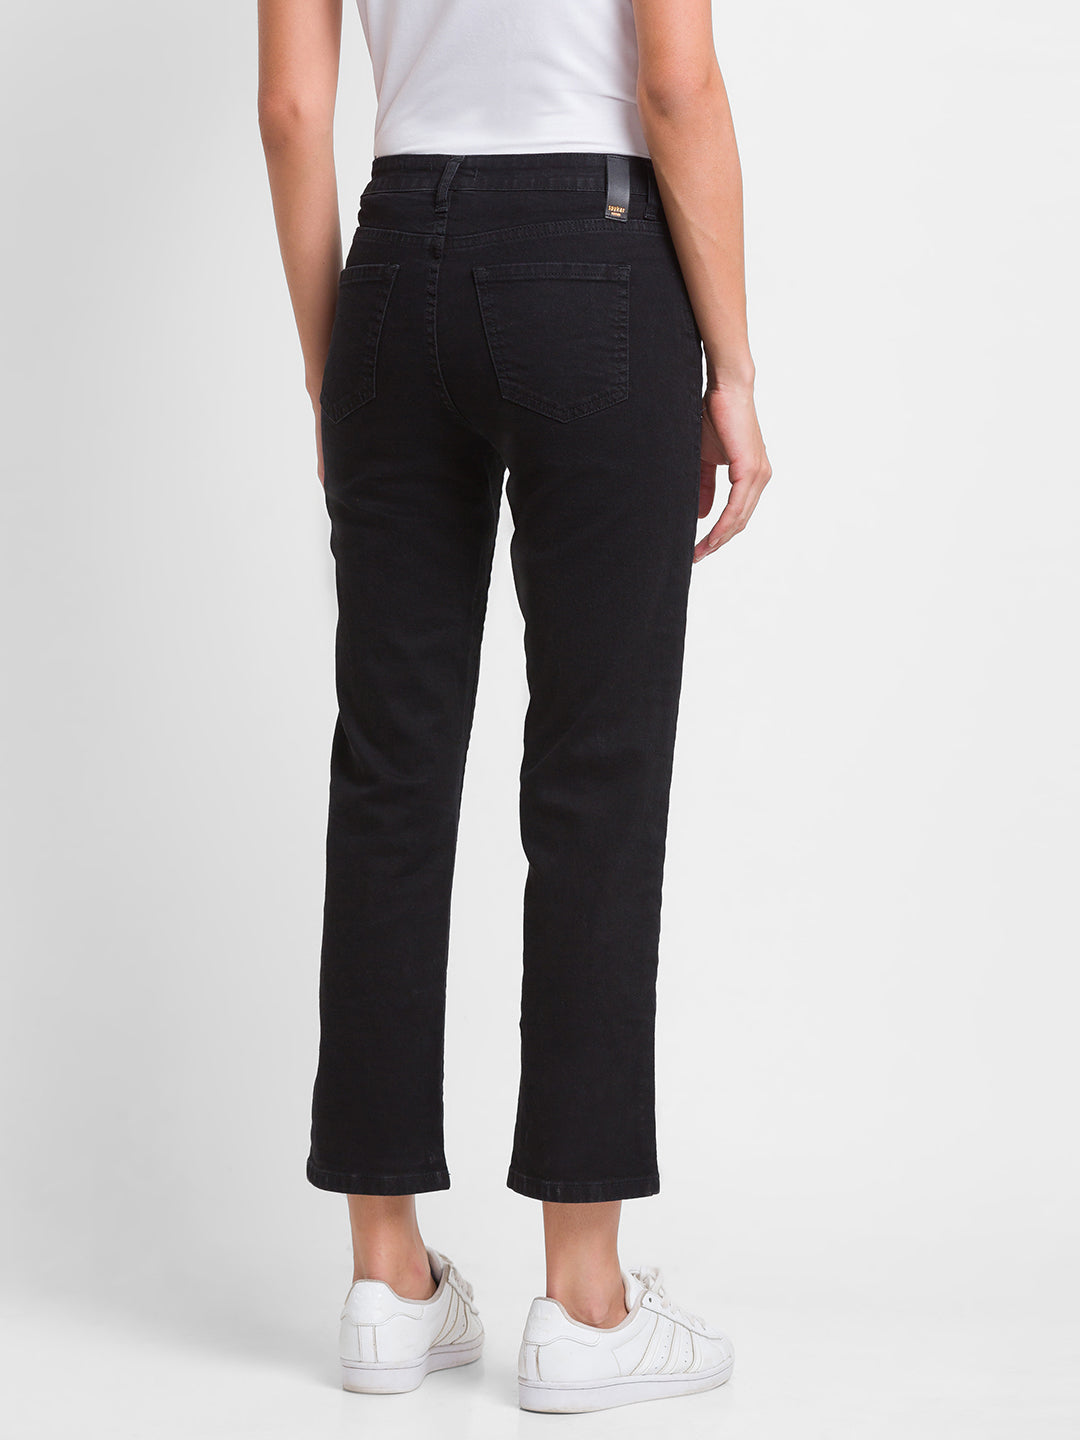 Spykar Black Lycra Slim Straight Fit Ankle Length Jeans For Women (Emma)